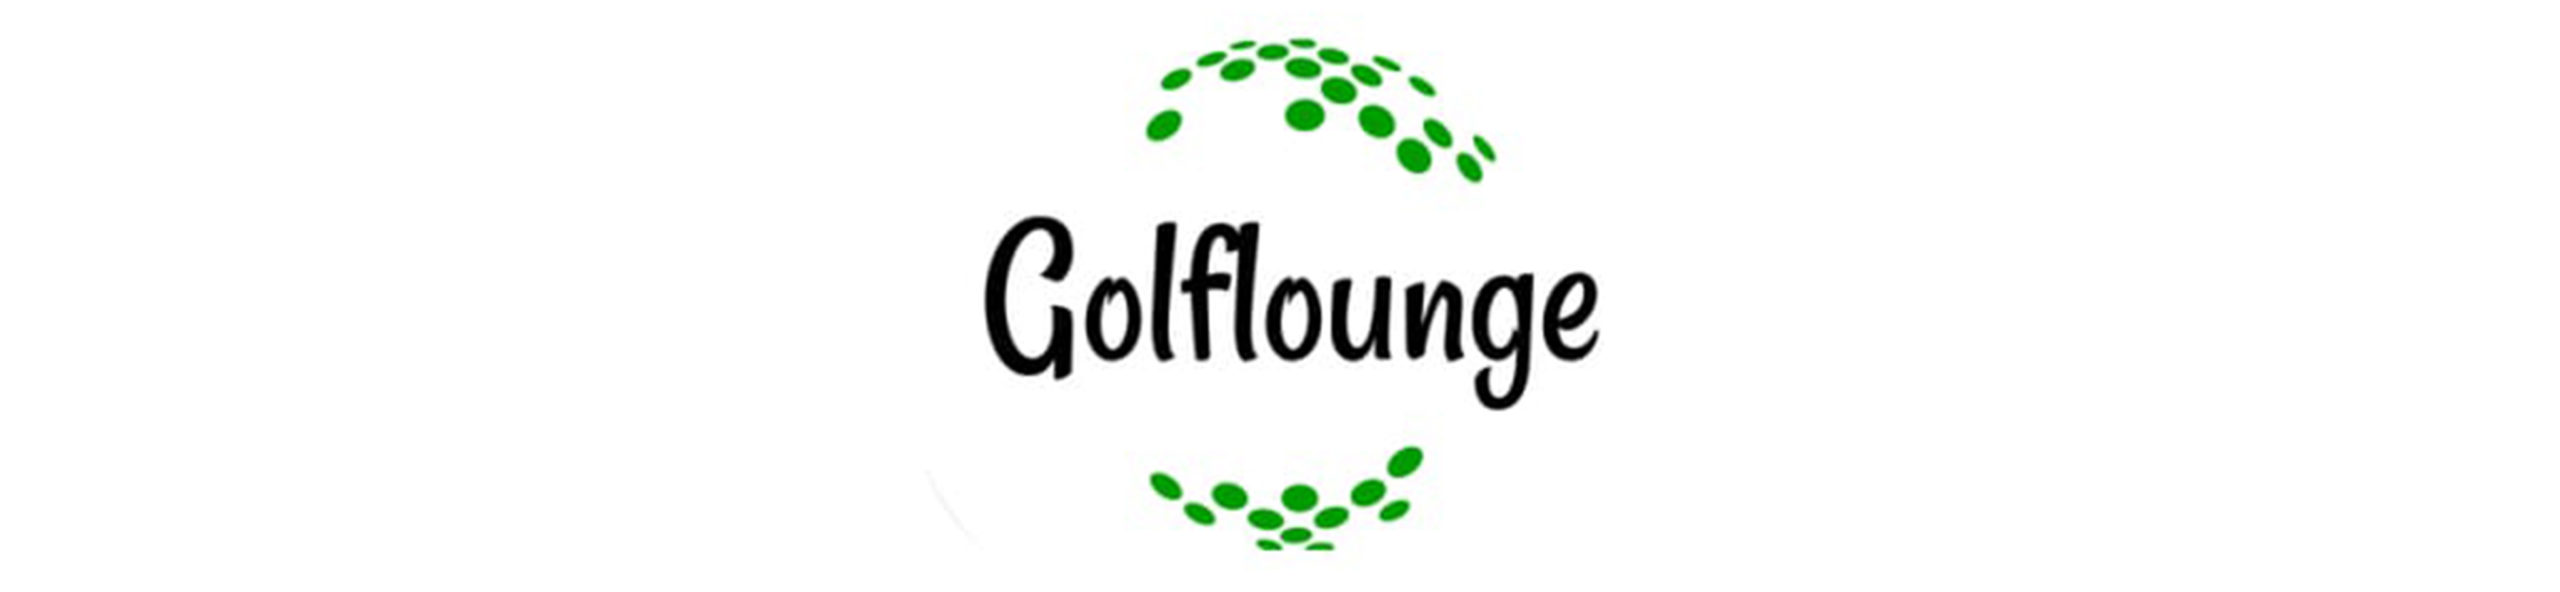 Golf lounge